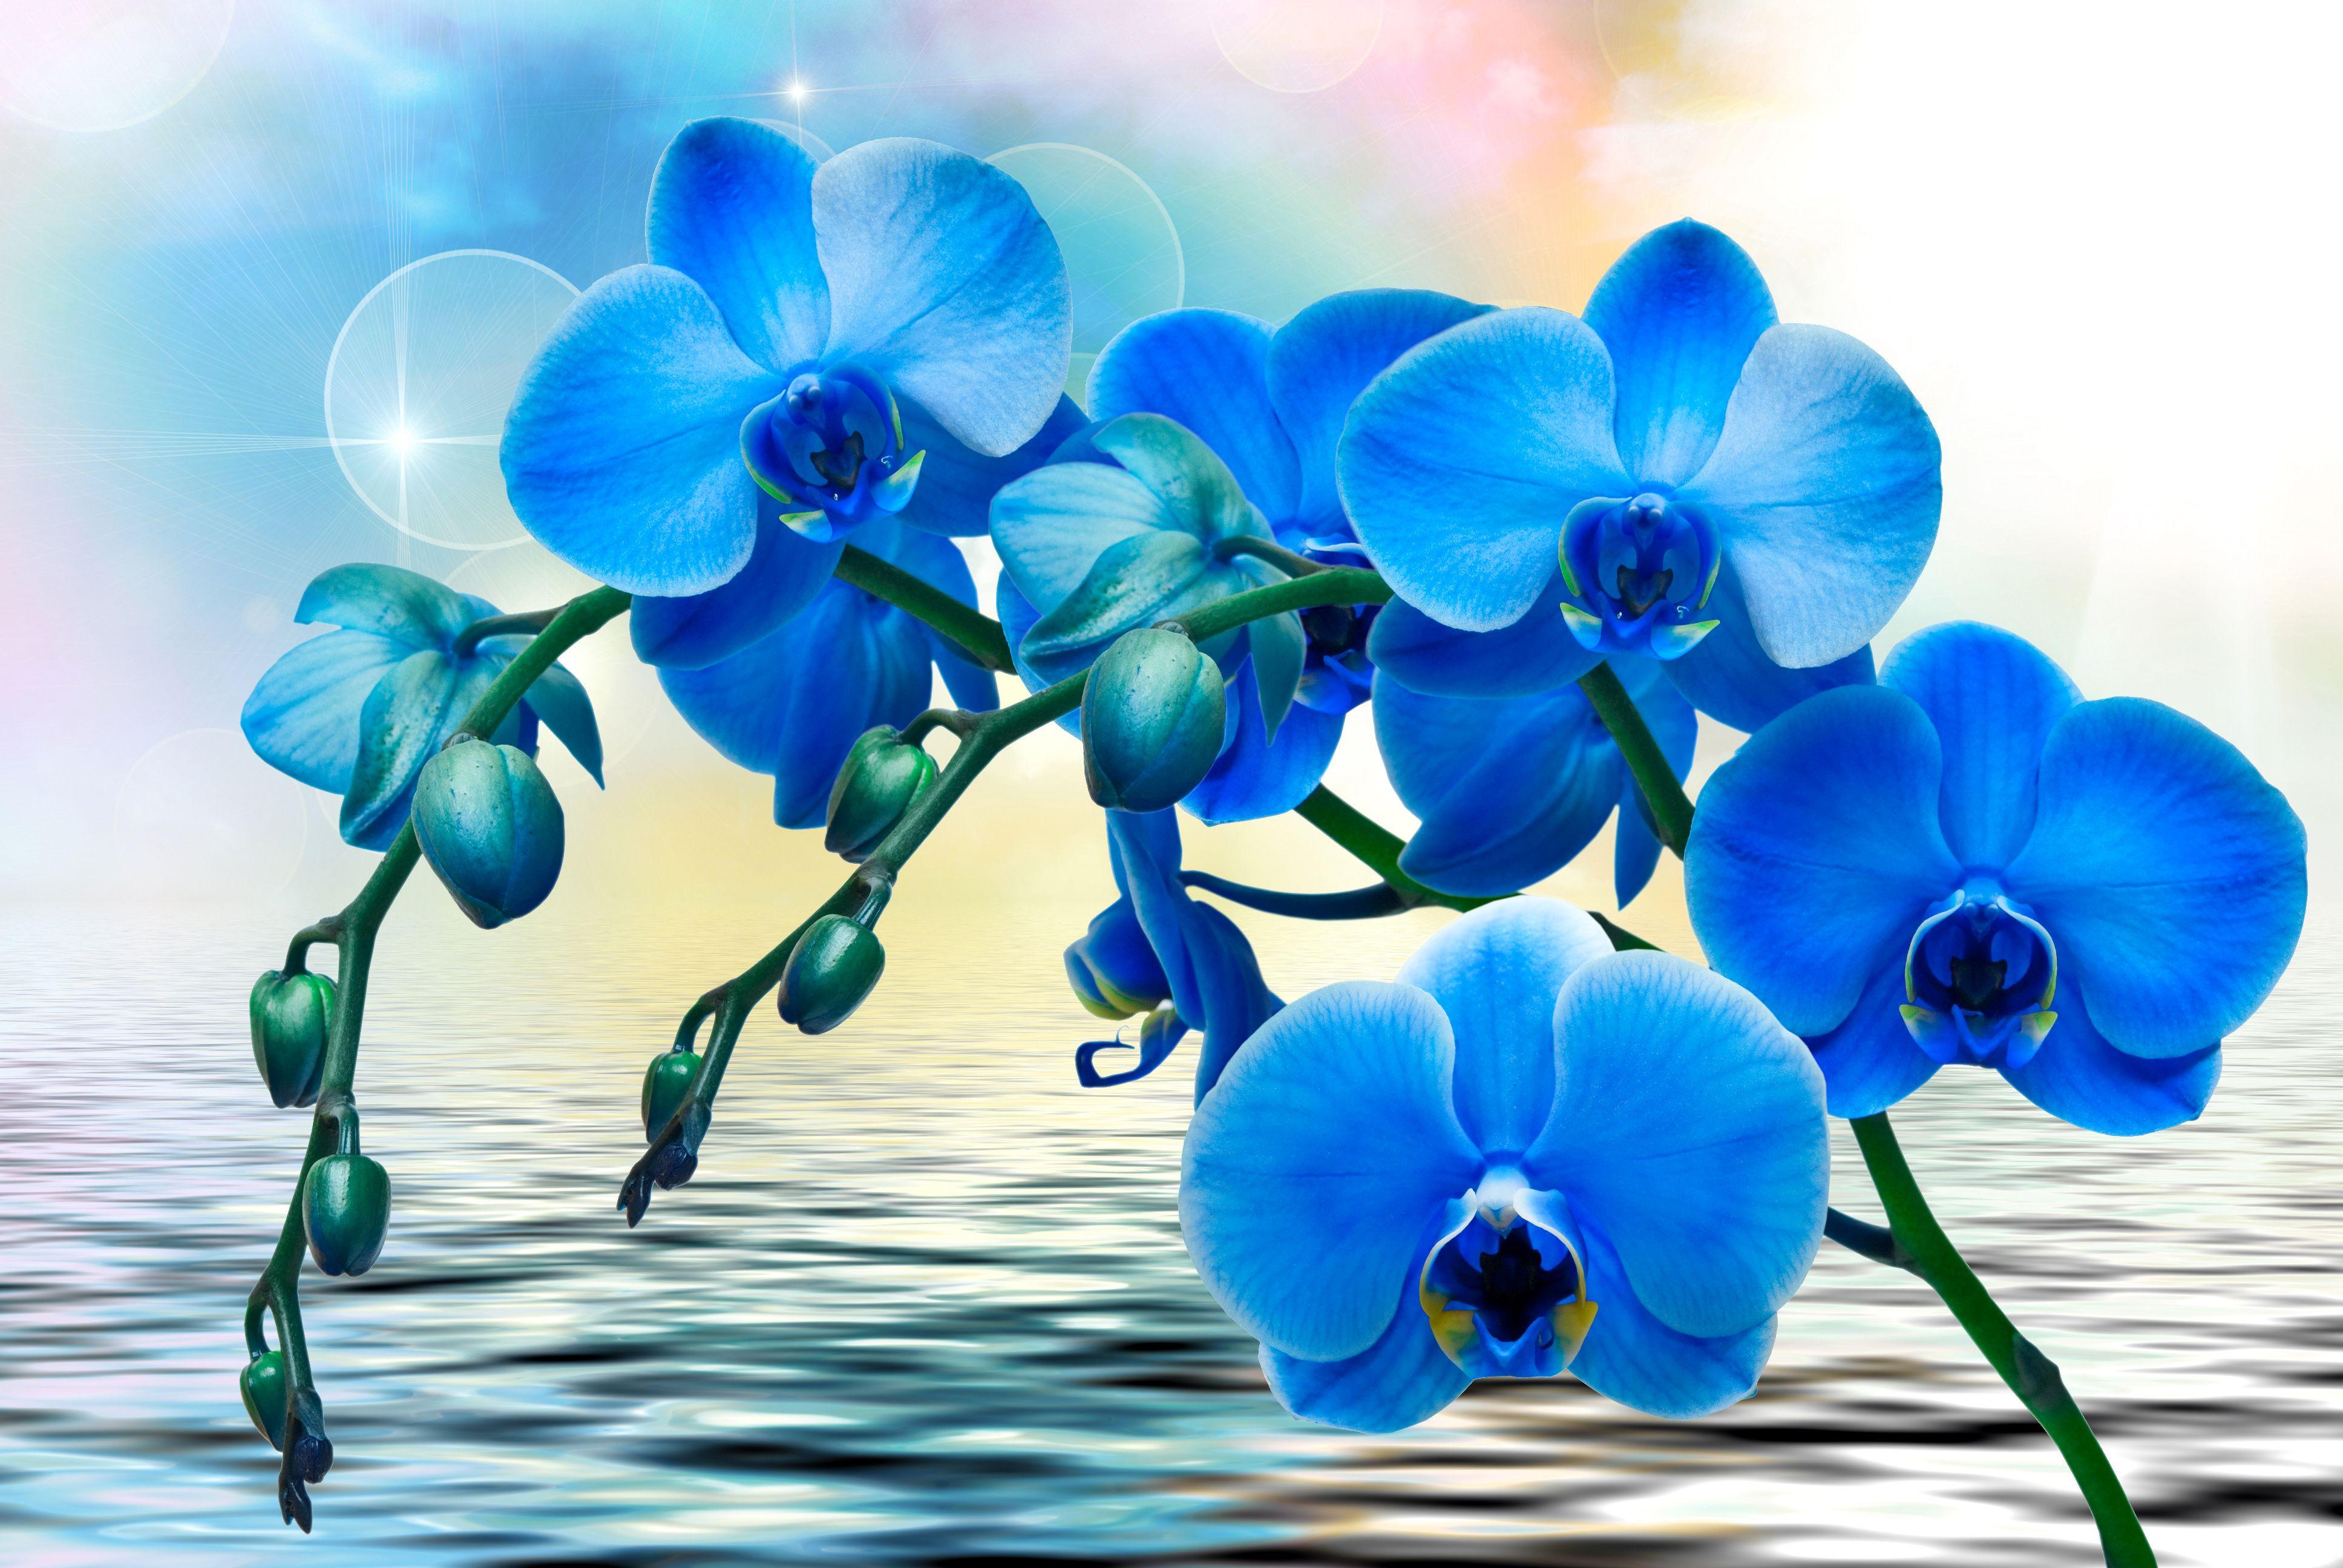 Blue Orchids 4k Ultra HD Wallpaper